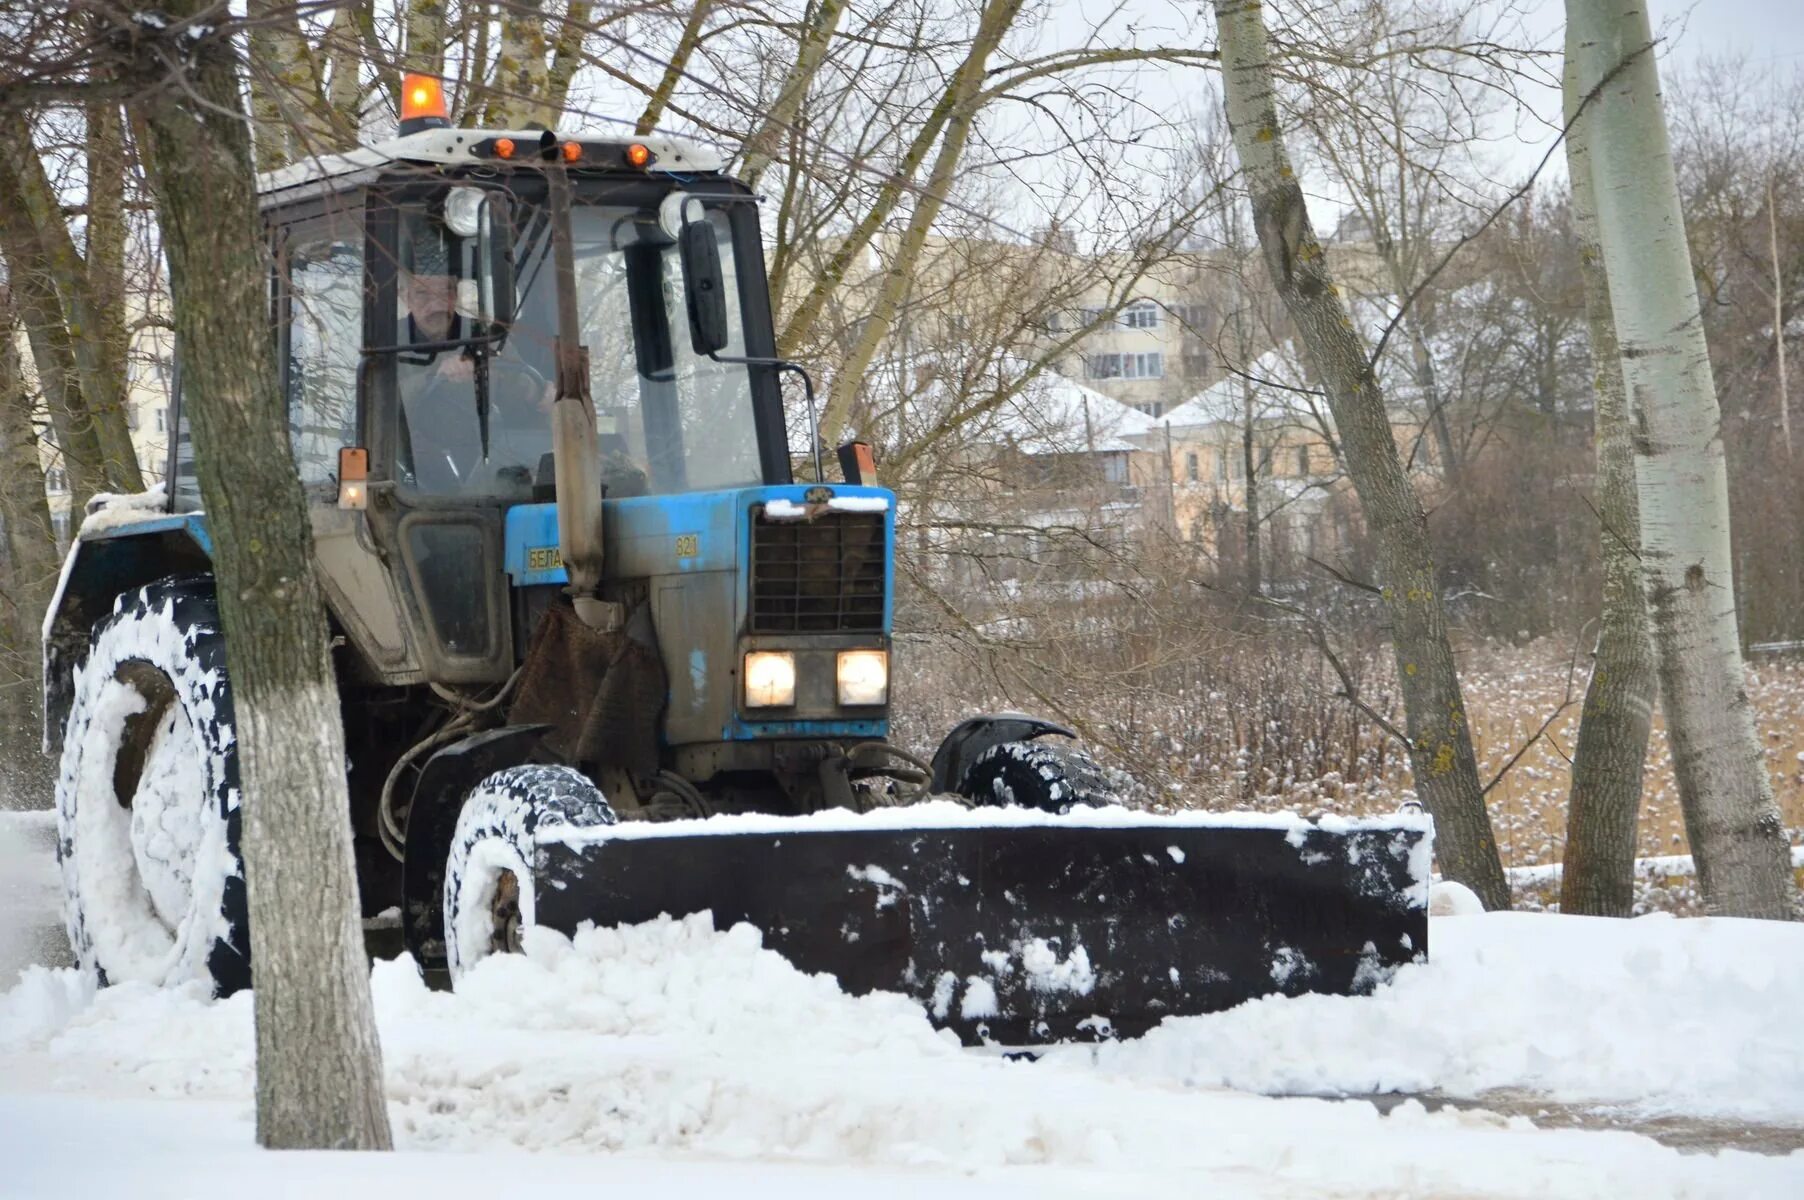 Игра трактора чистят снег. Трактор МТЗ-80 уборркаснега. Трактор для уборки снега. Трактор МТЗ уборка снега. Очистка снега трактором.